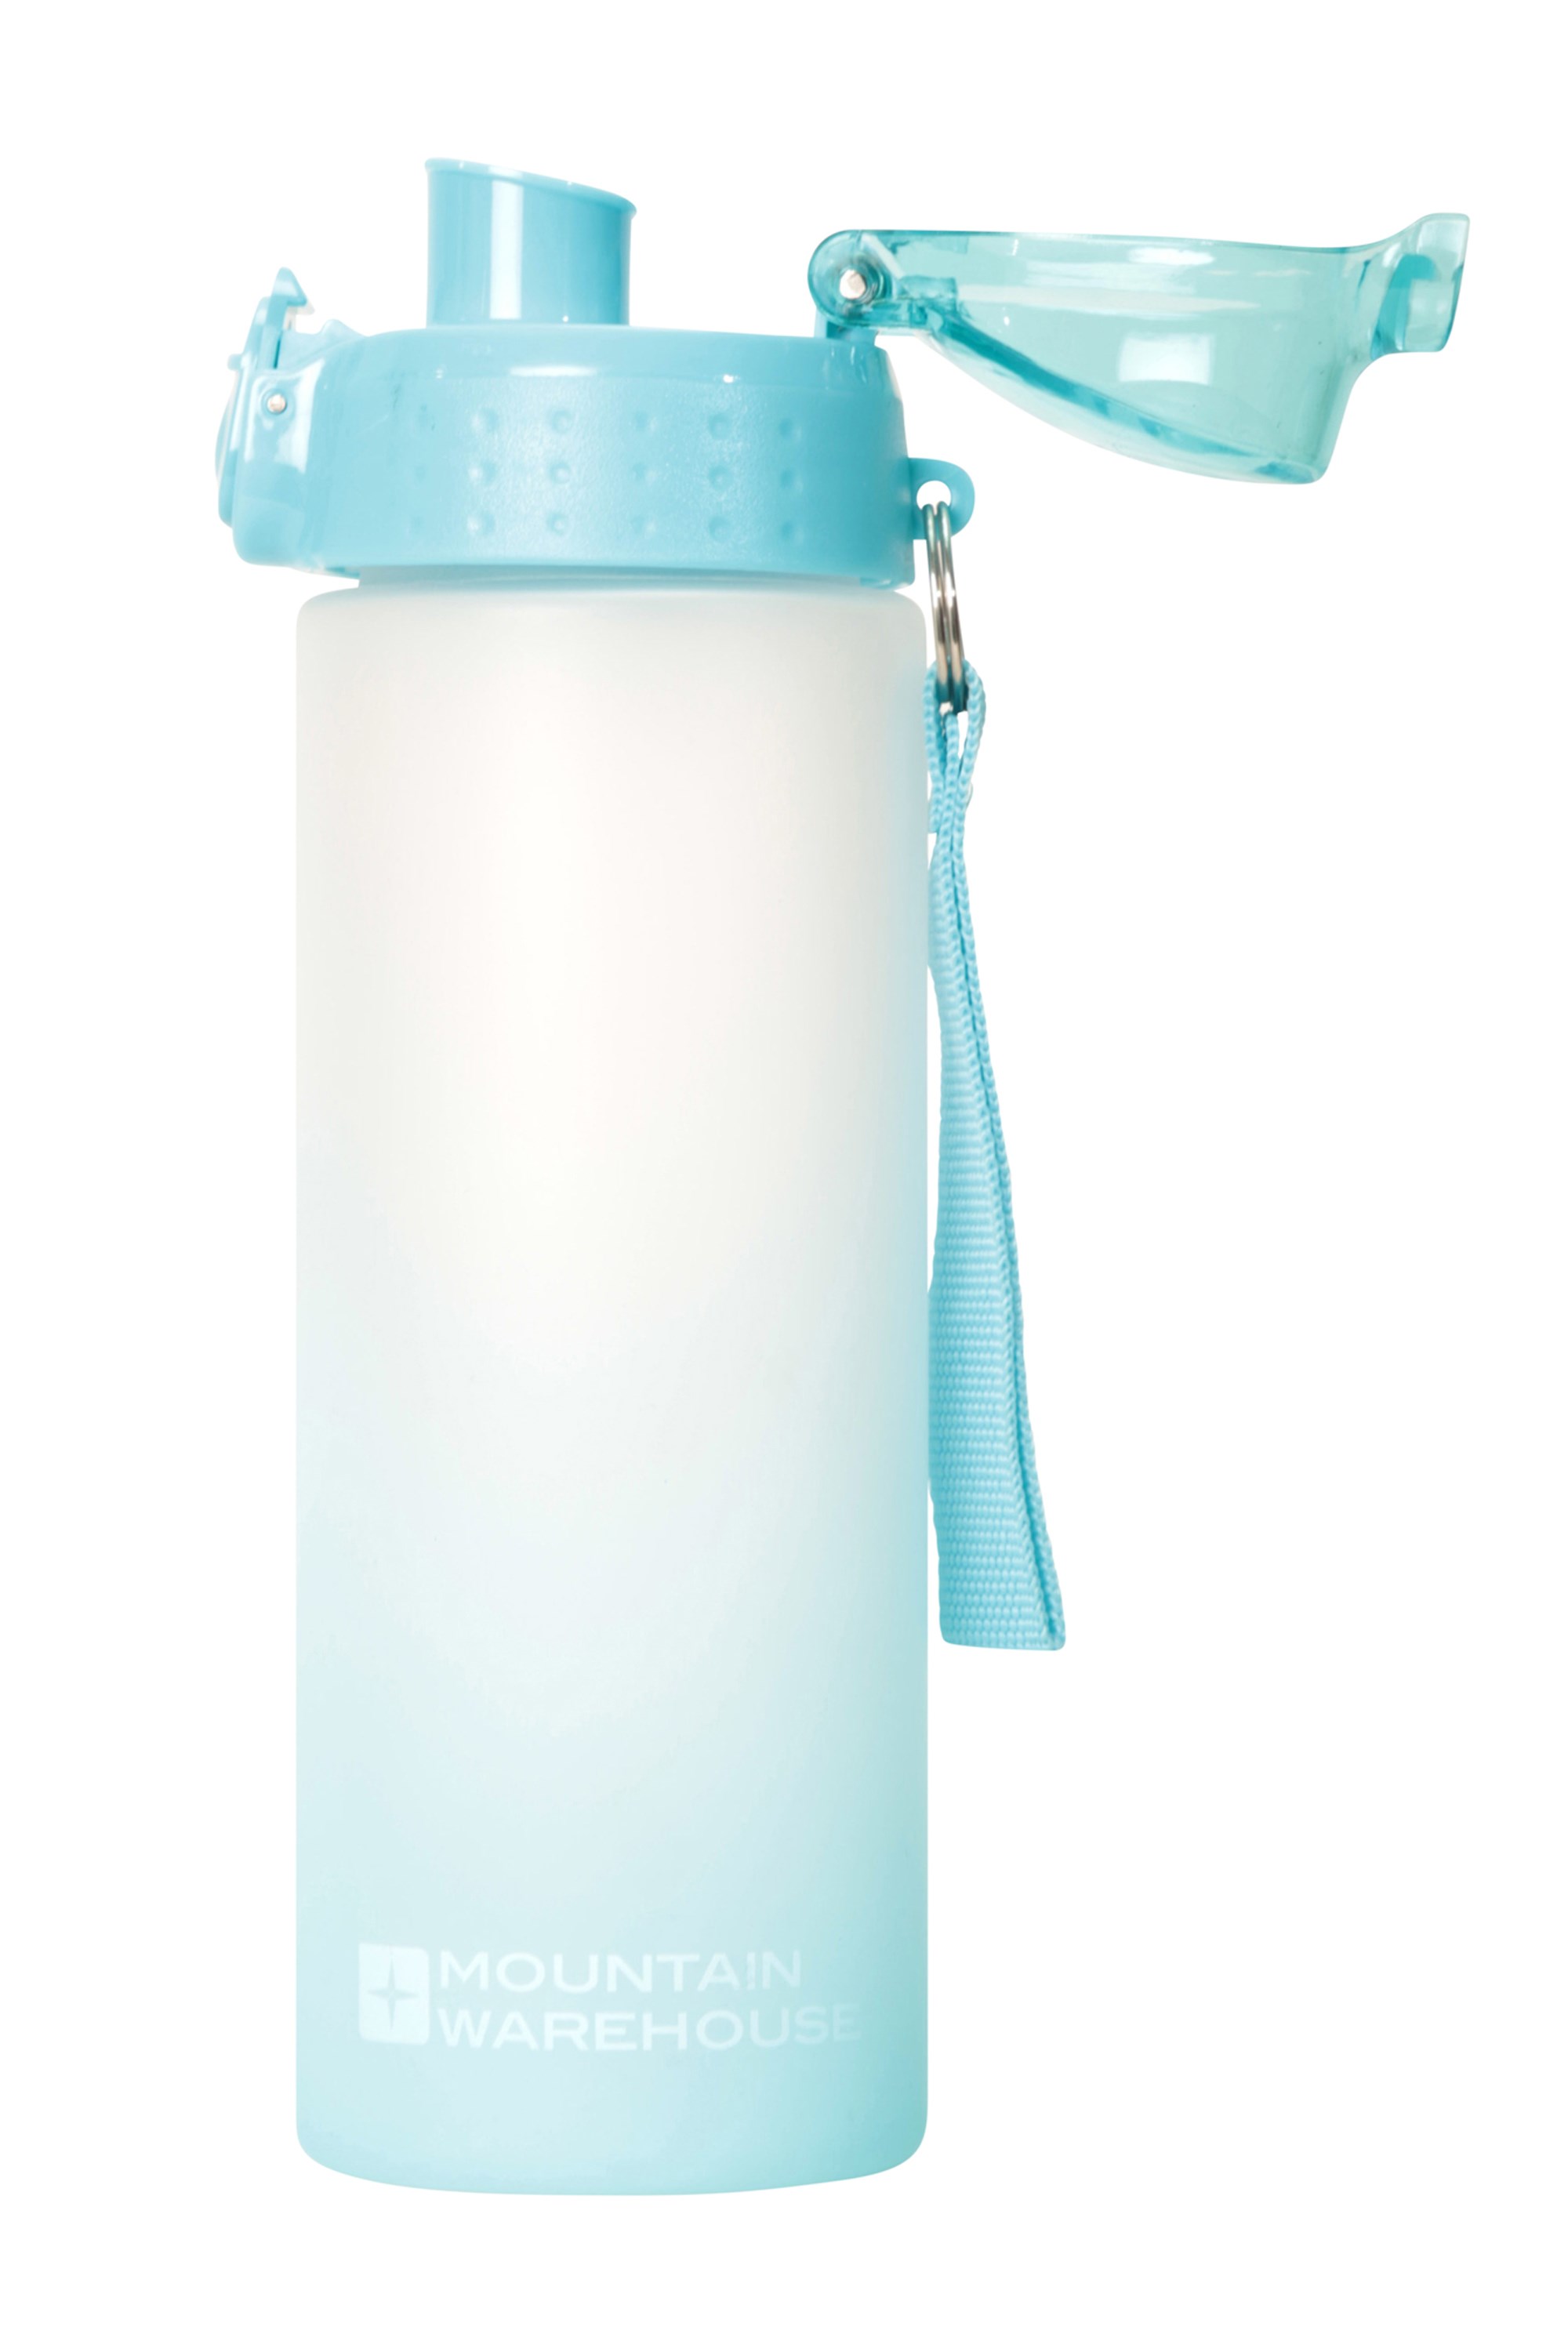 Kids Water Bottle with Straw BPA Free Water Bottles 600 ml 20 Oz